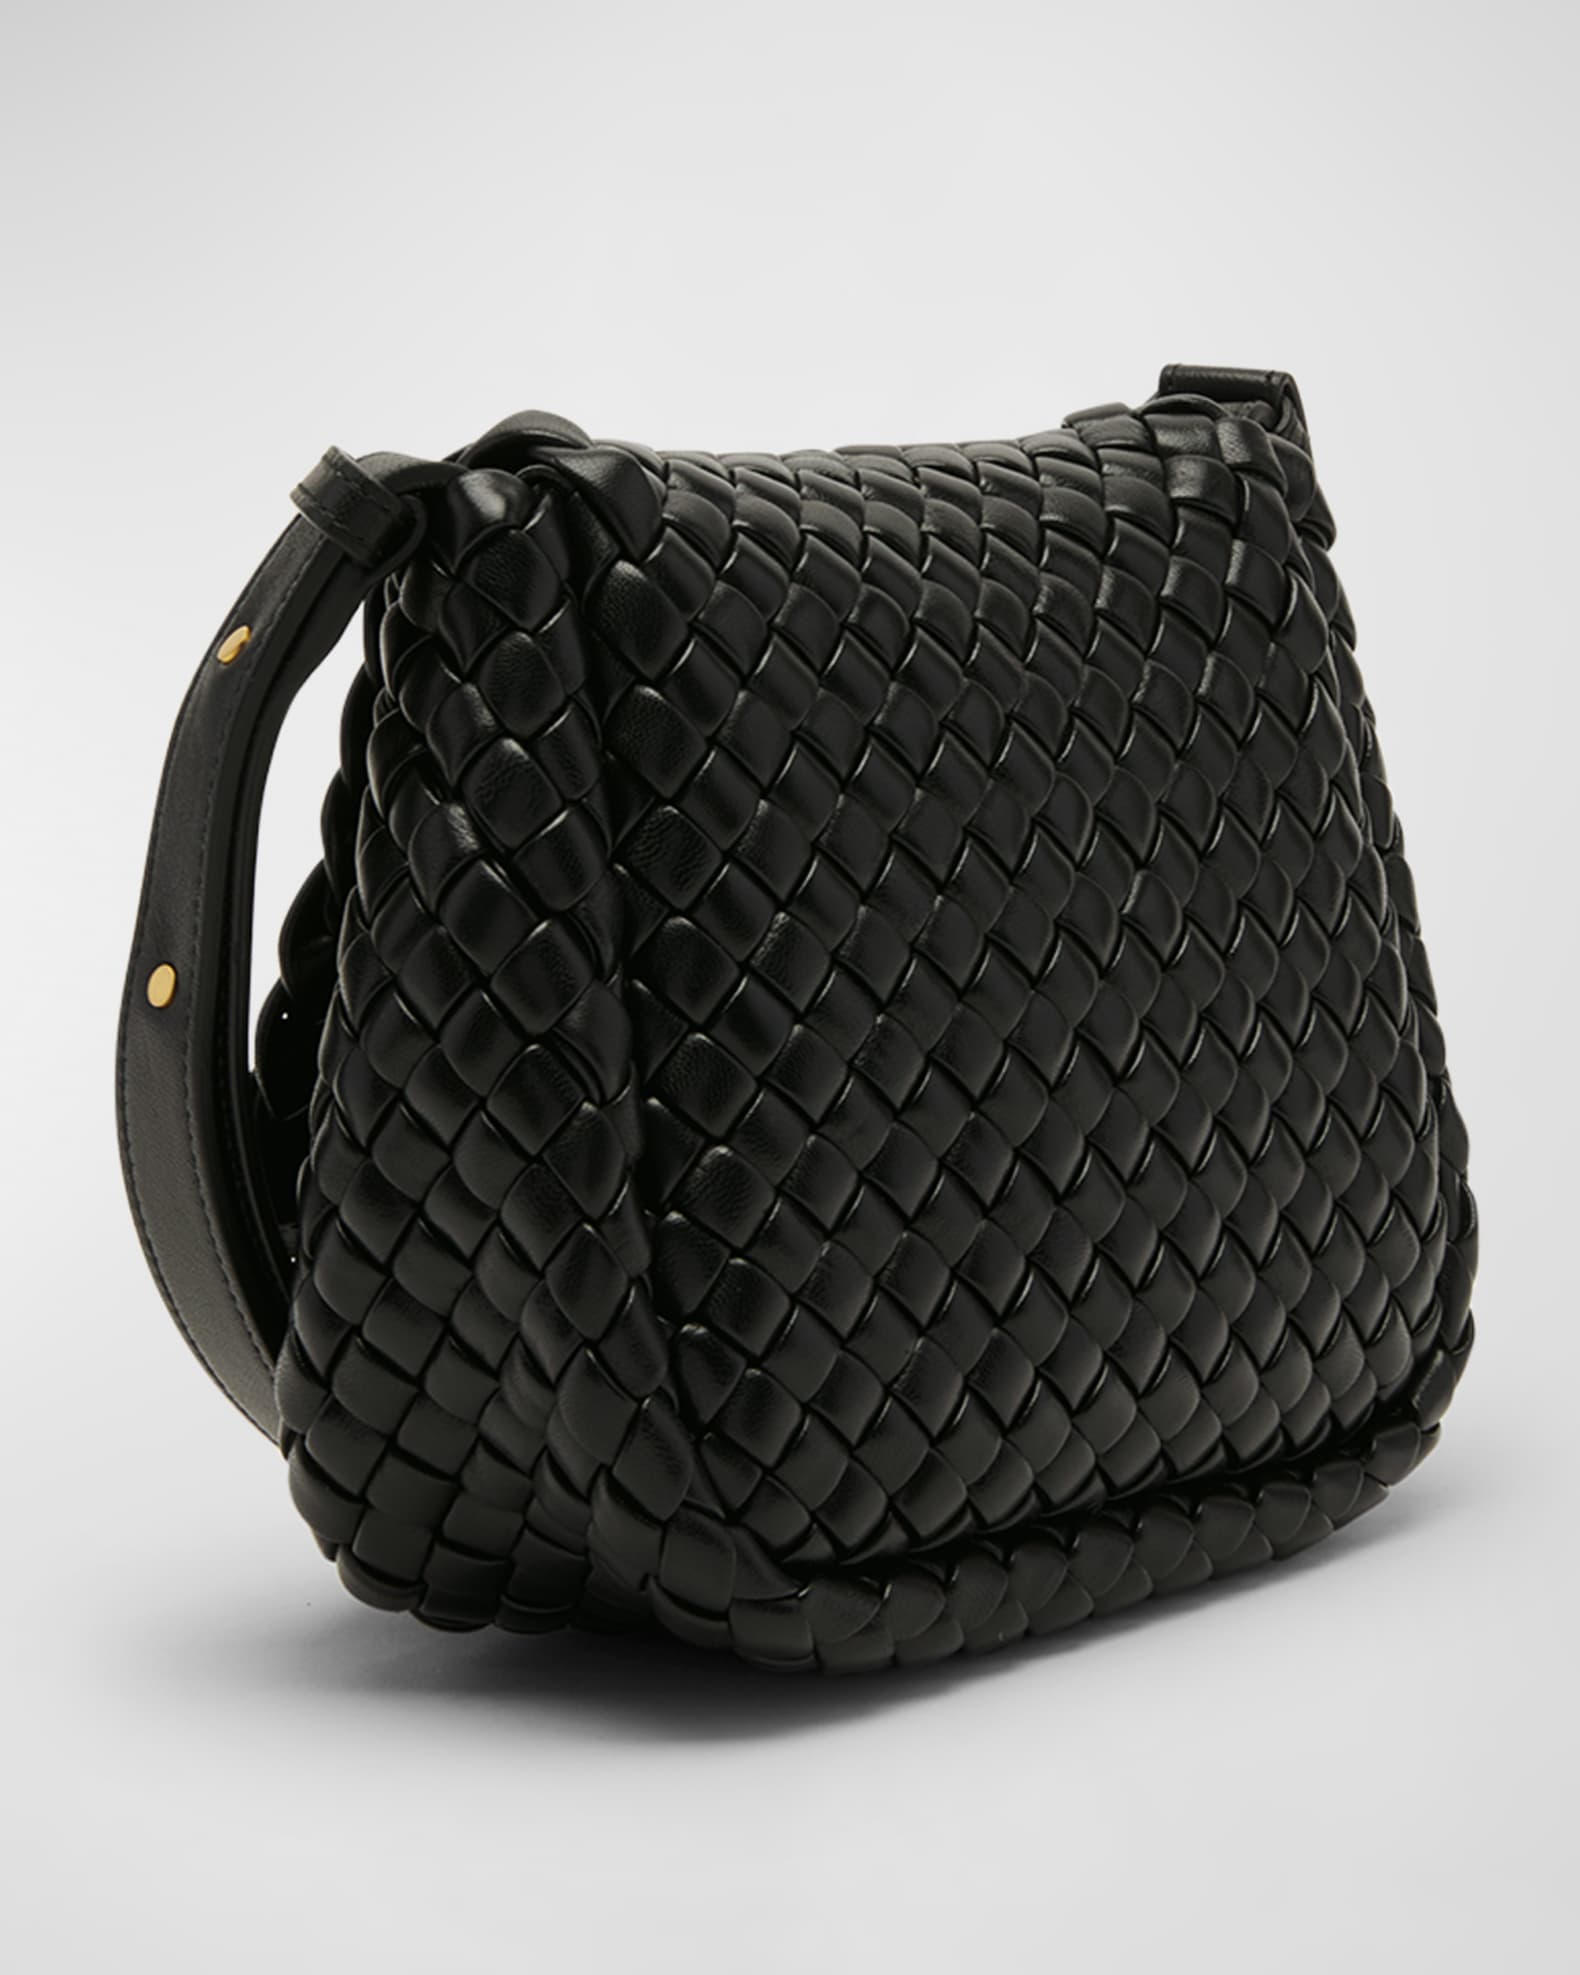 Bottega Veneta Women's Cobble Shoulder Bag